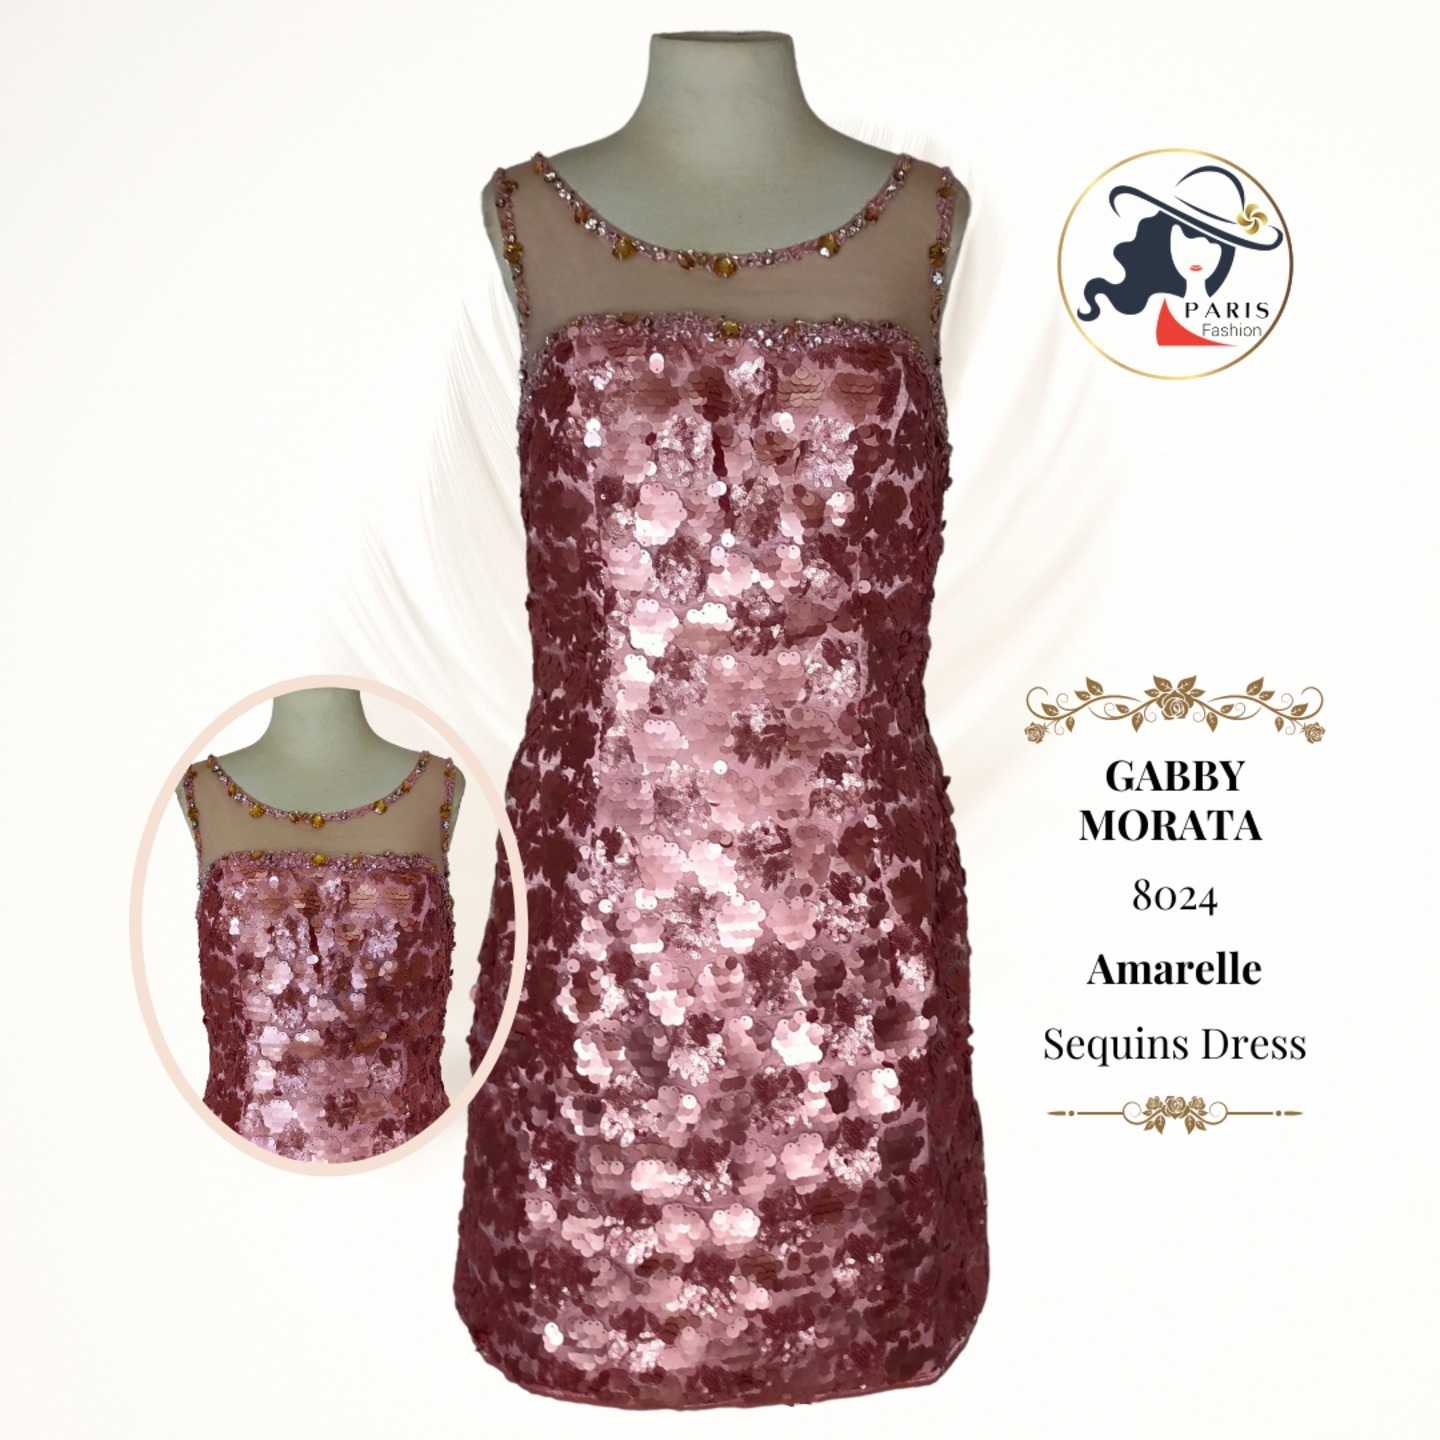 GABBY MORATA   8024   Amarelle   Sequins Dress